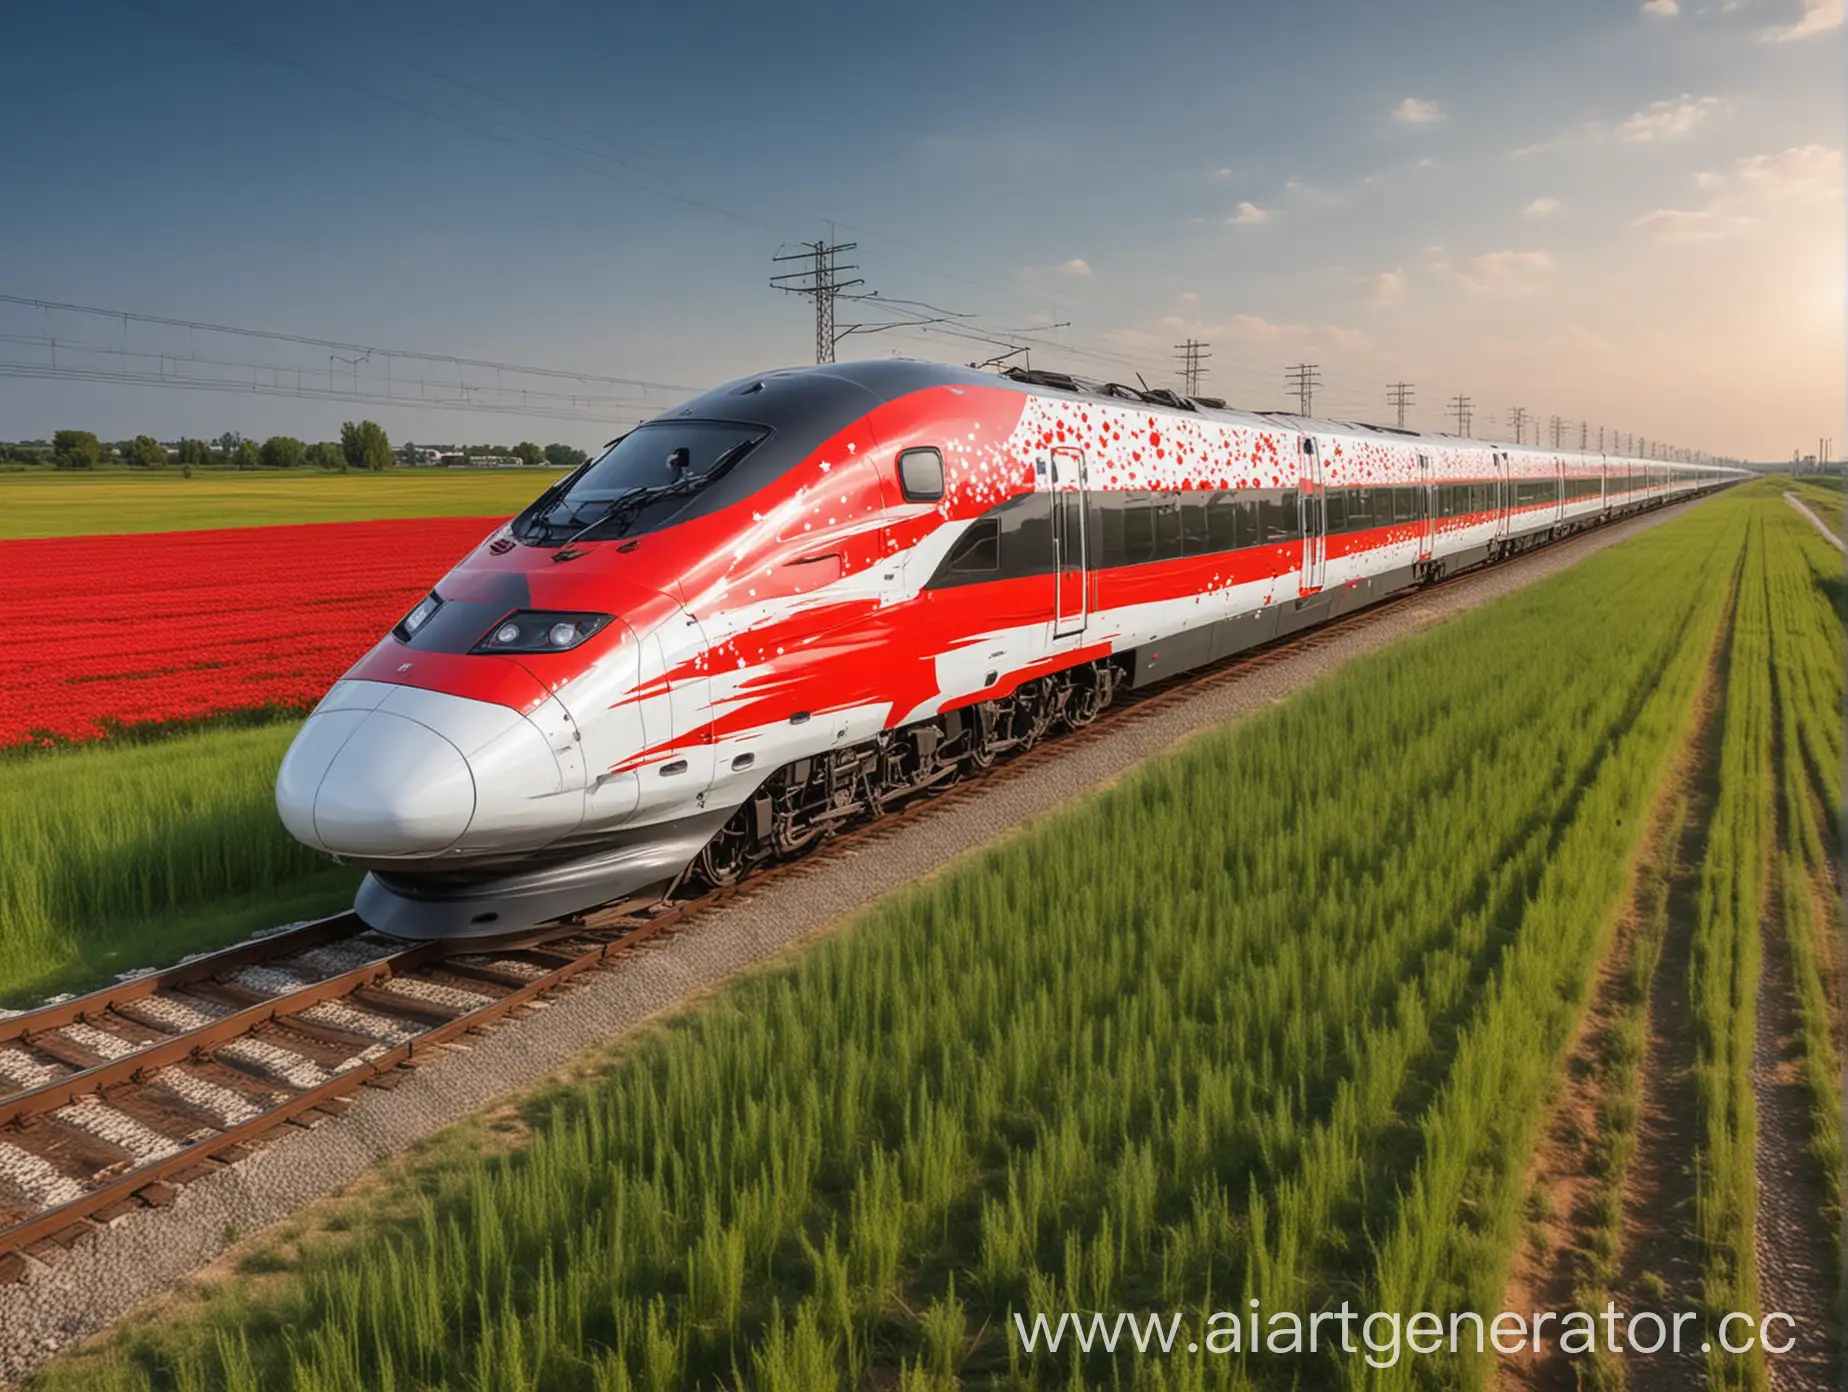 Red-Star-Pattern-HighSpeed-Train-Racing-Across-Beautiful-Field